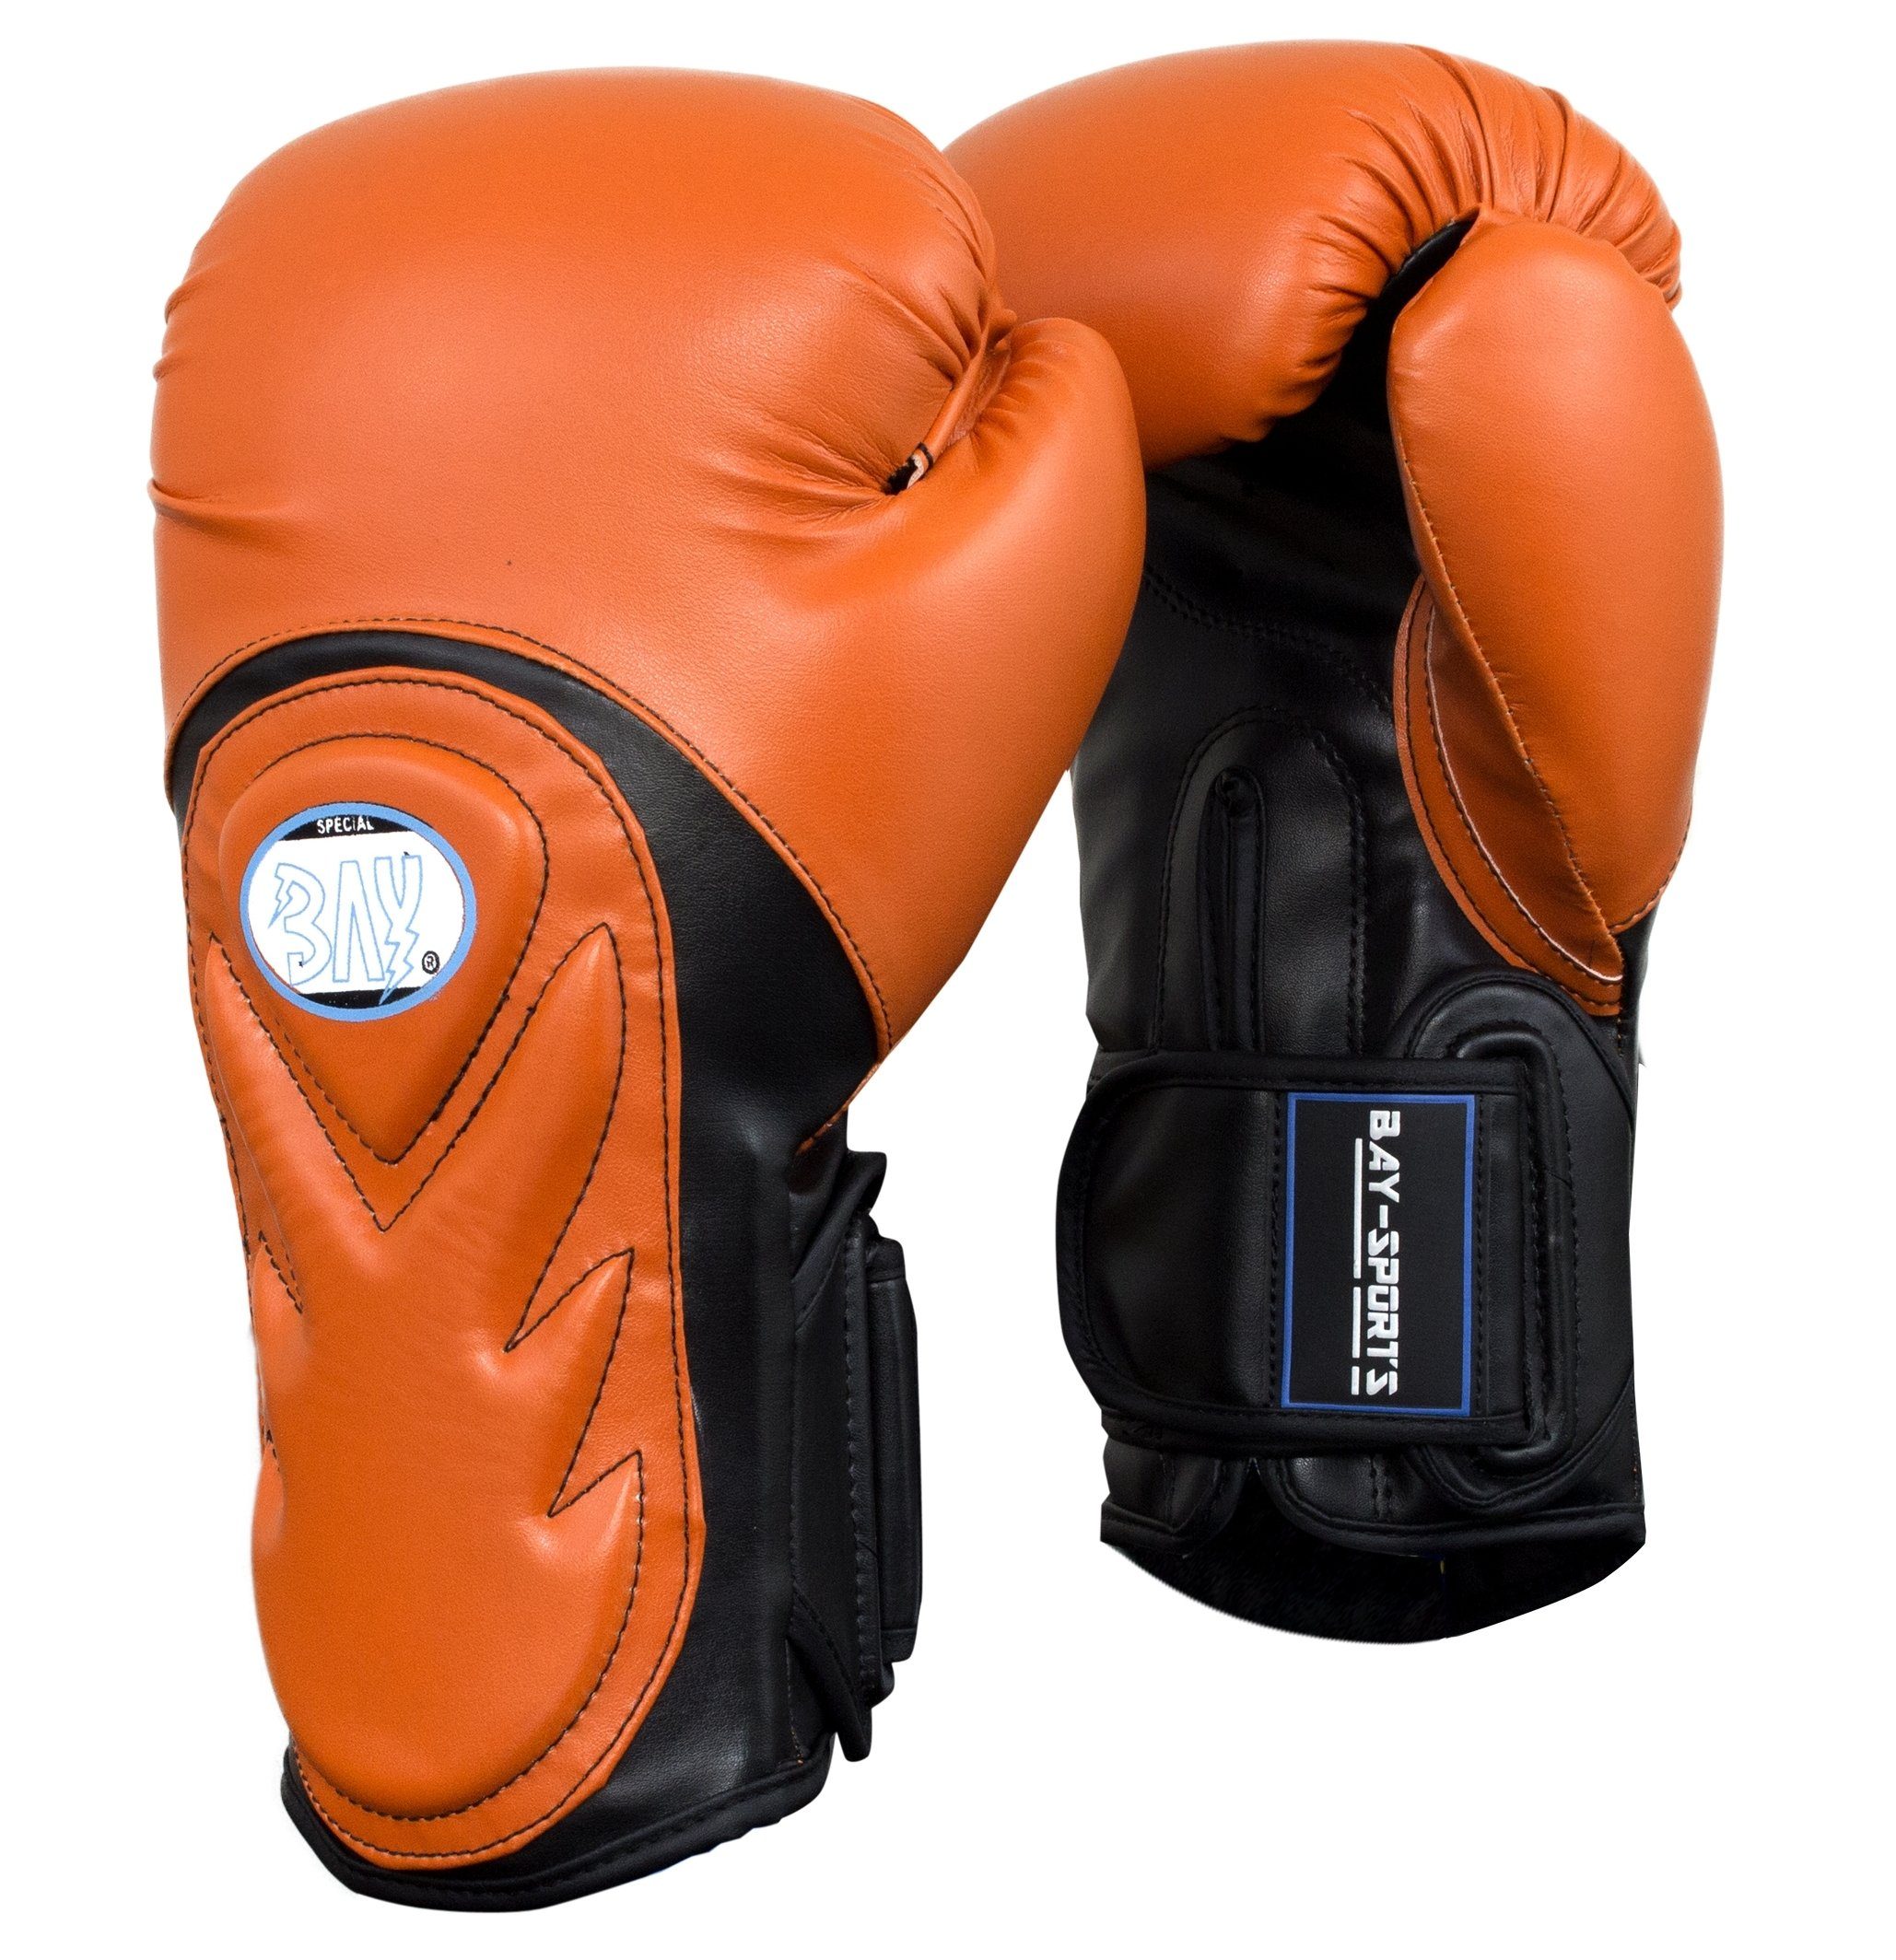 Bad Box-Handschuhe Boxen orange/schwarz BAY-Sports Style Boxhandschuhe